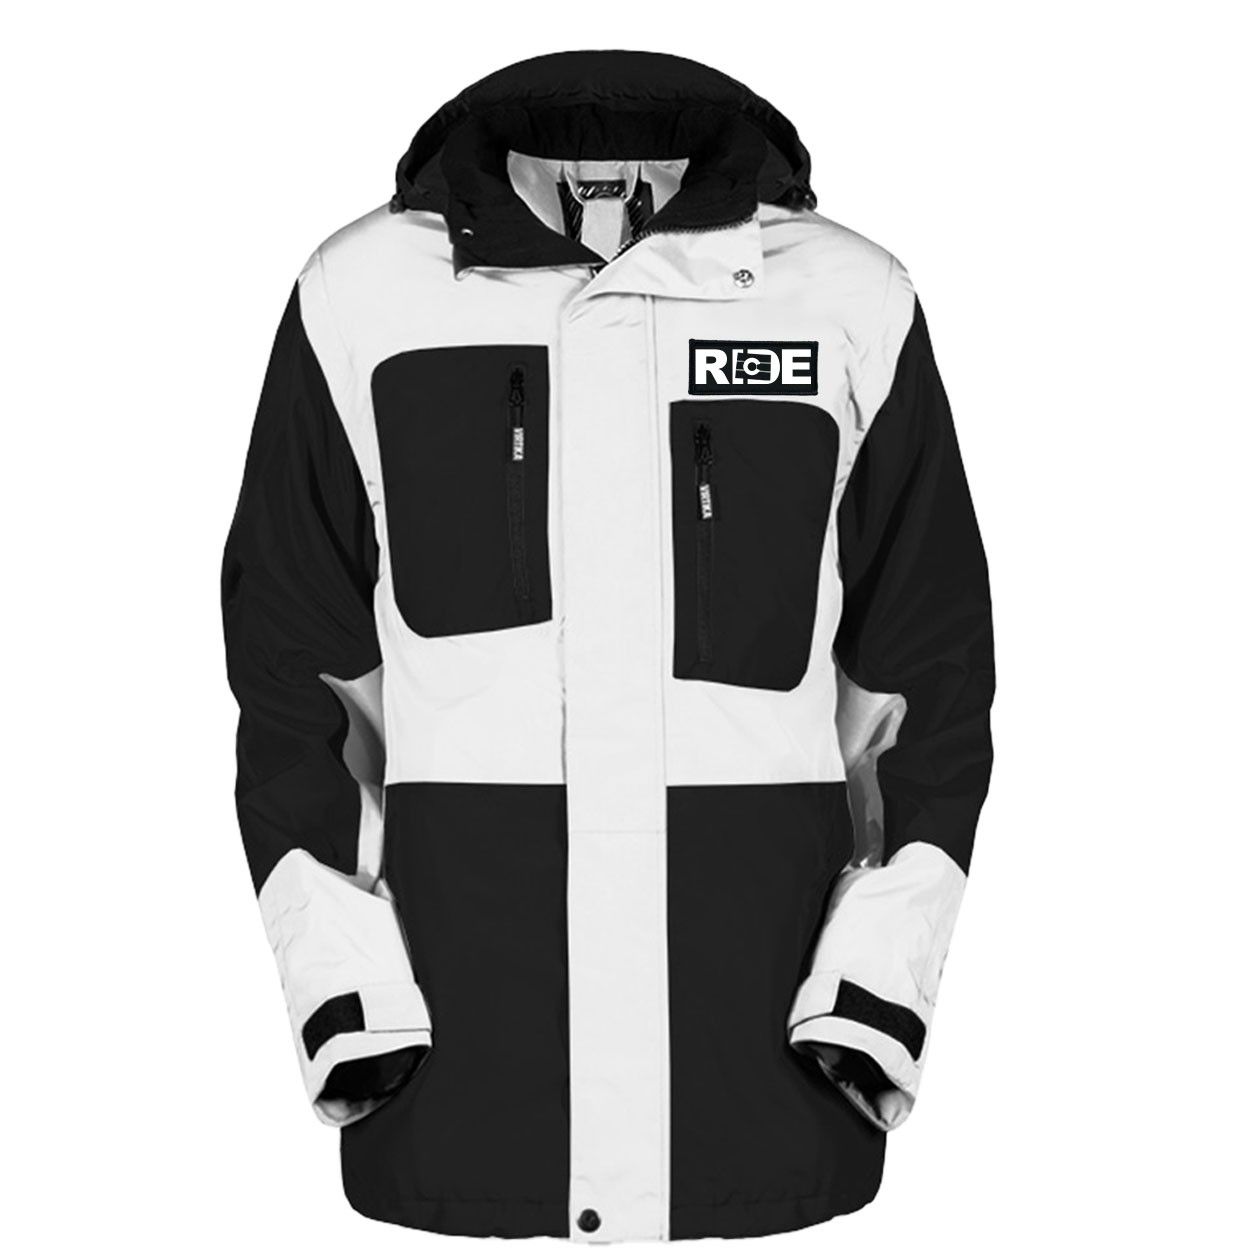 Ride Colorado Pro Waterproof Breathable Winter Virtika Jacket Black/White (White Logo)